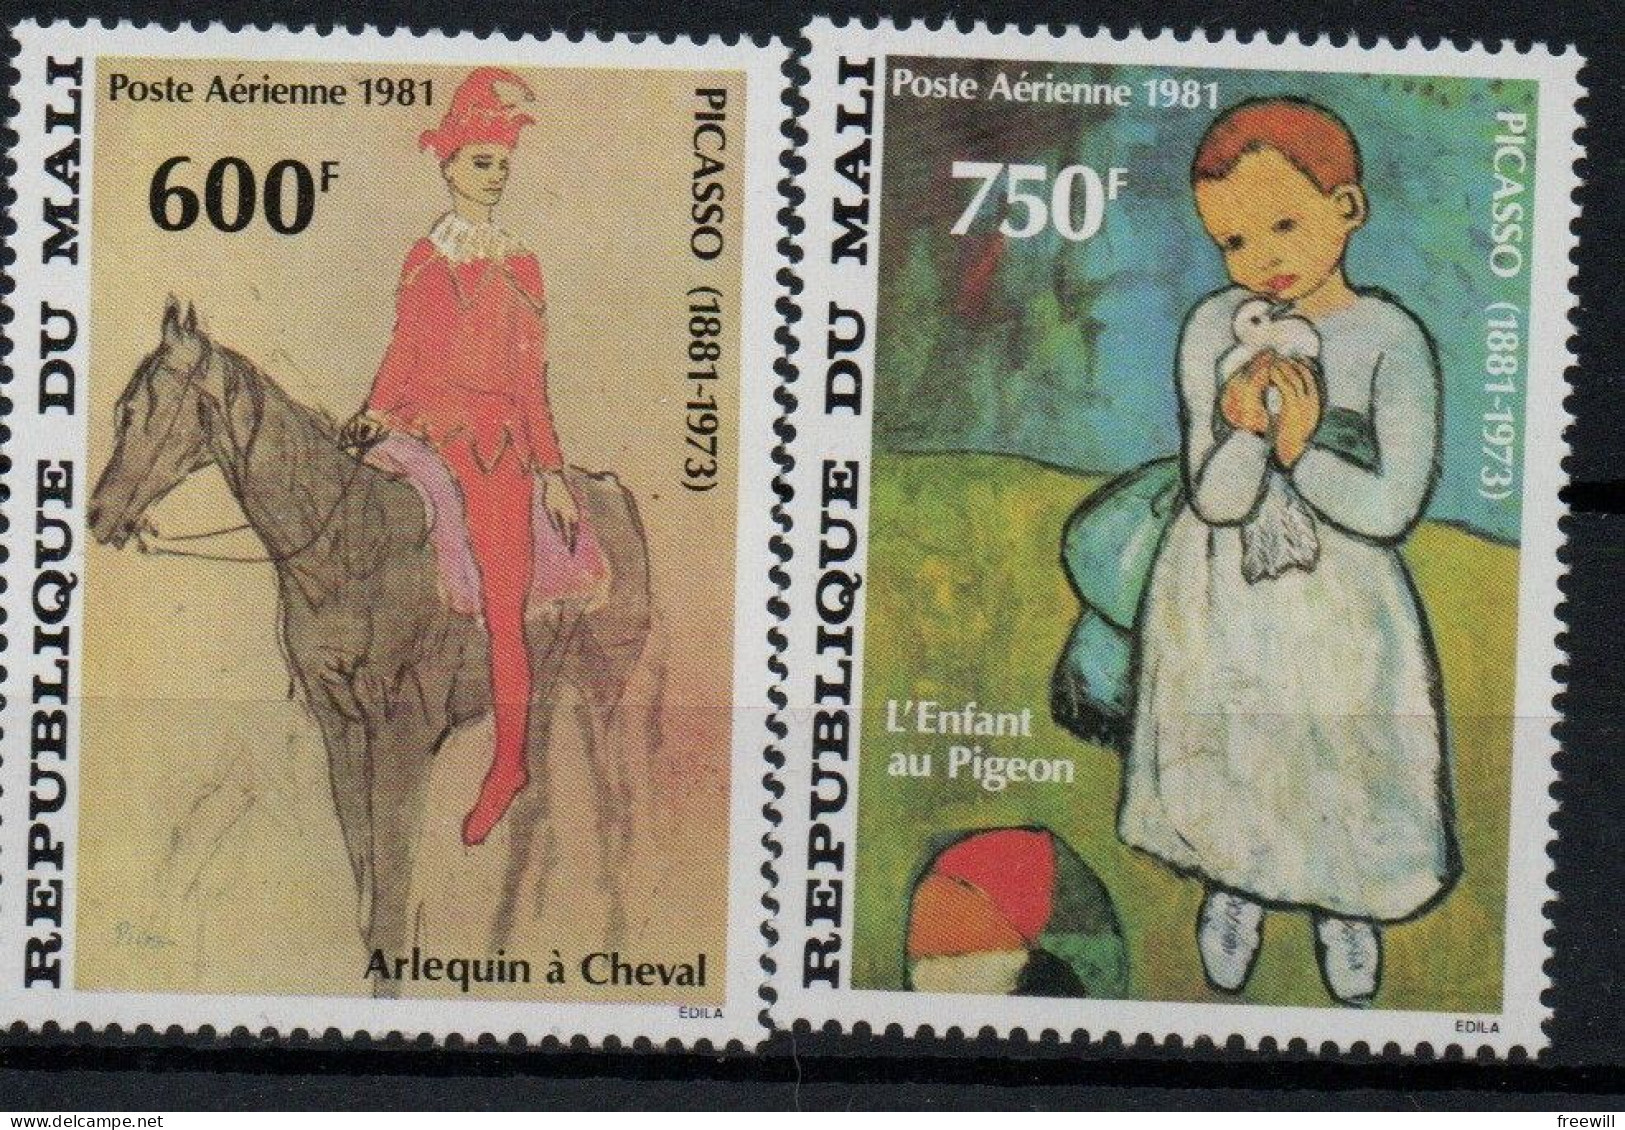 Timbres divers - Various stamps -Verschillende postzegels XXX